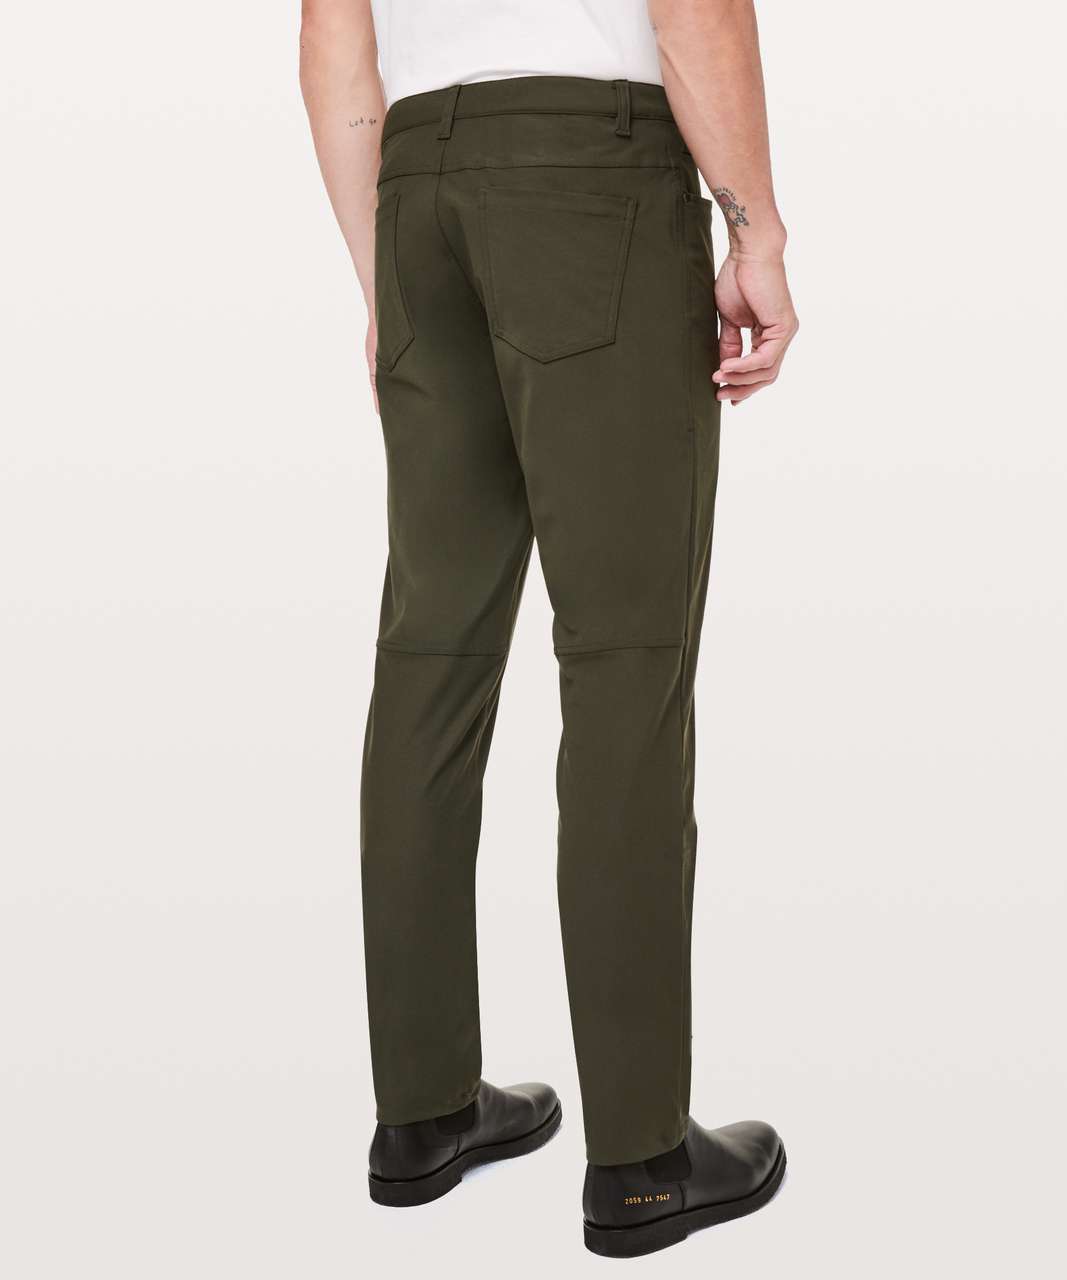 Lululemon ABC Relaxed Fit Crop Pants Utilitech Size 38 Dark Olive